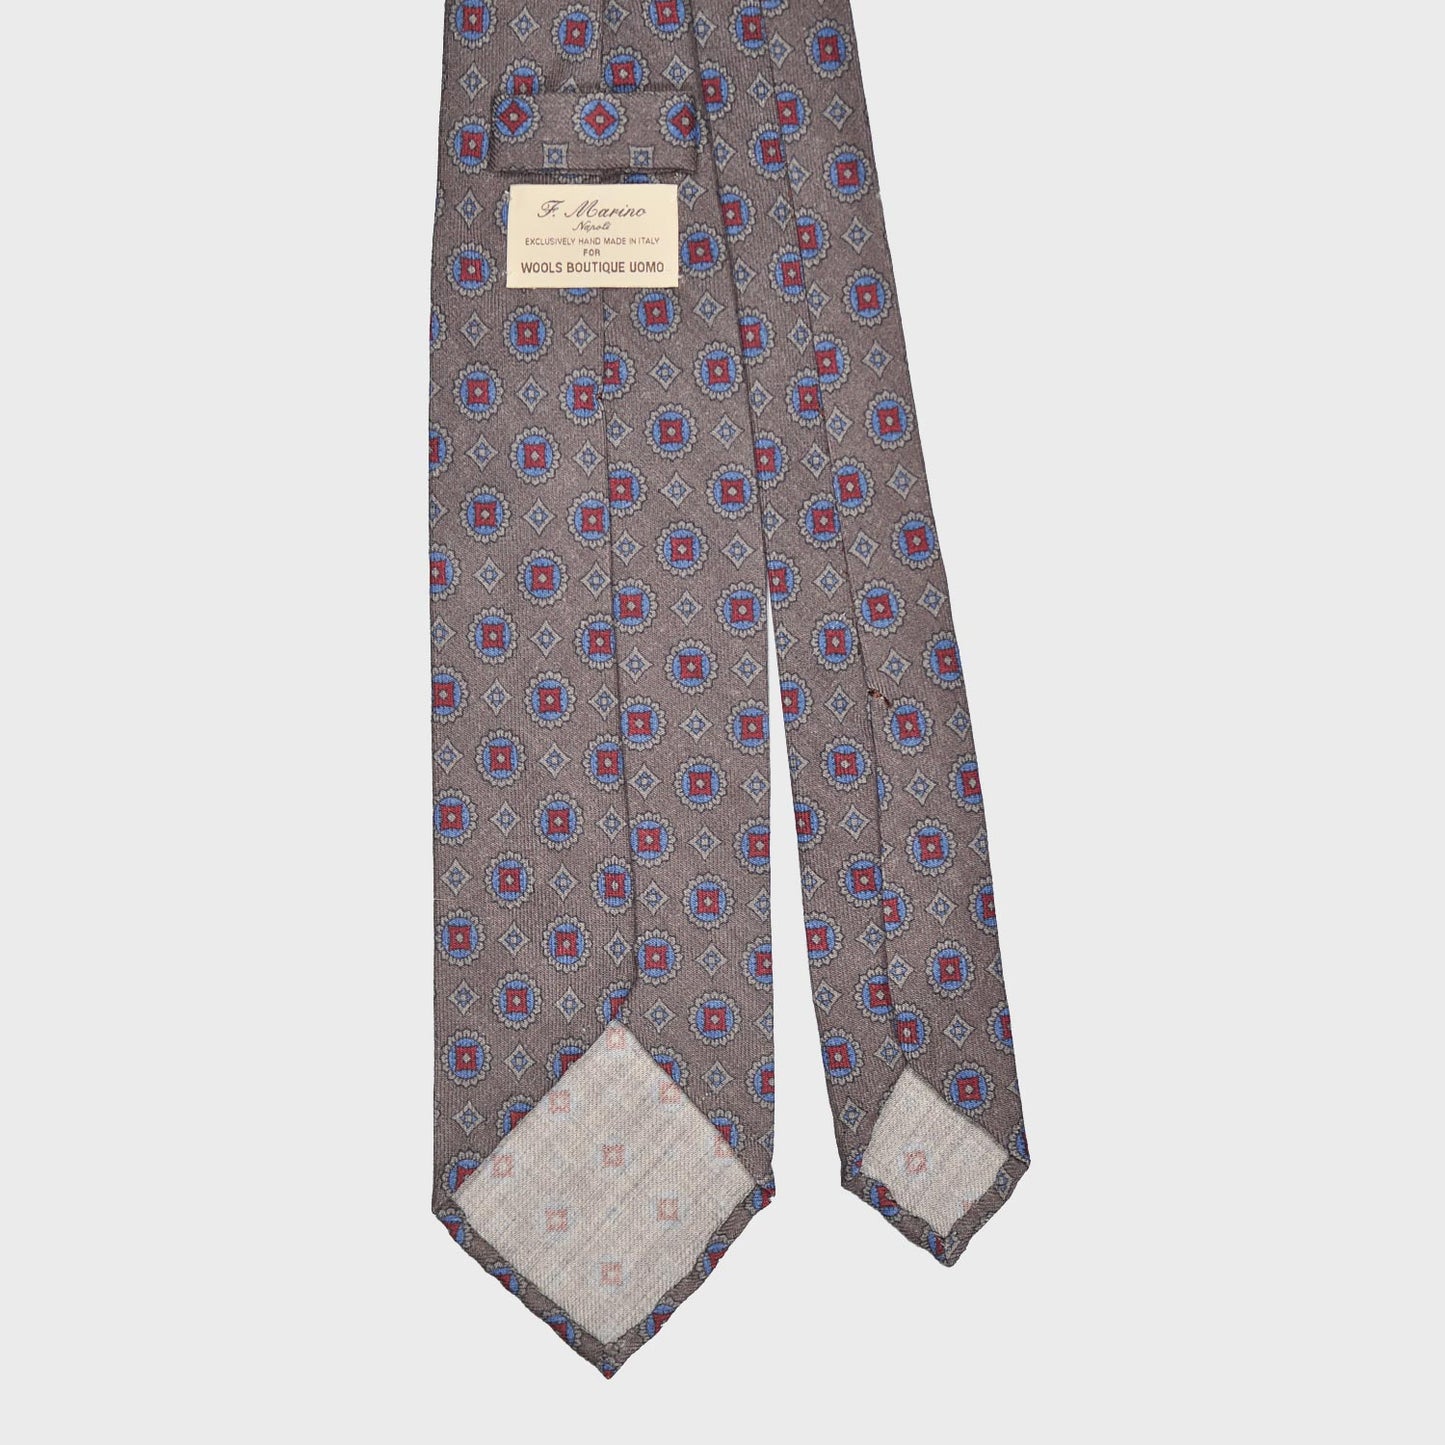 F.Marino Wool Tie 3 Folds Daisy Smoke Grey-Wools Boutique Uomo